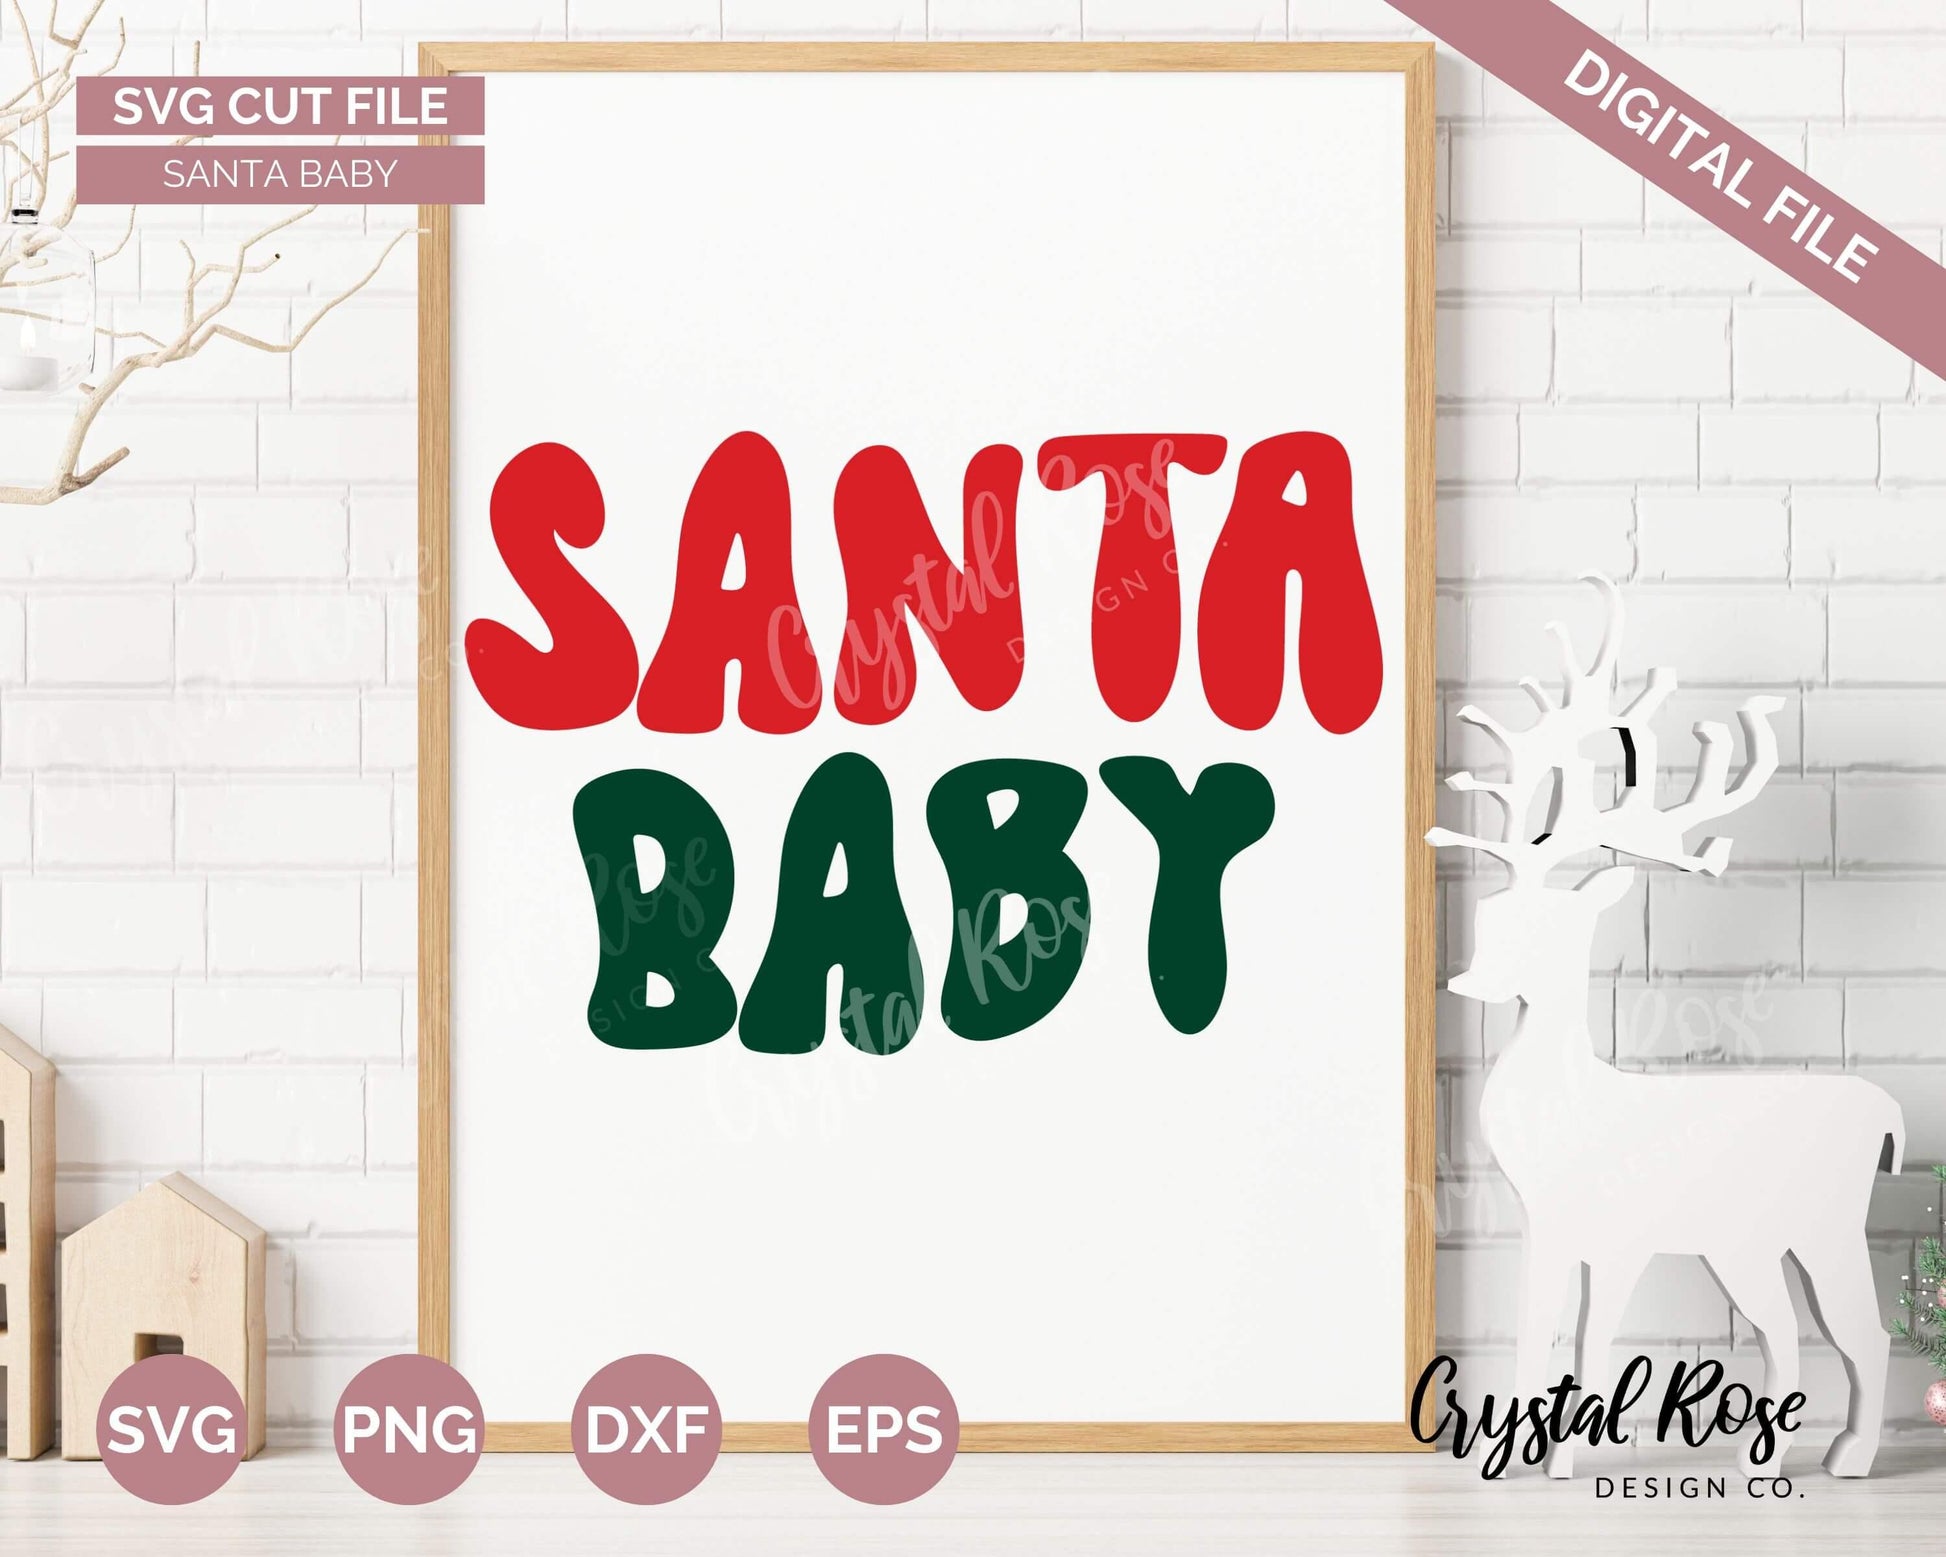 Retro Santa Baby SVG, Christmas SVG, Digital Download, Cricut, Silhouette, Glowforge (includes svg/png/dxf/eps) - Crystal Rose Design Co.